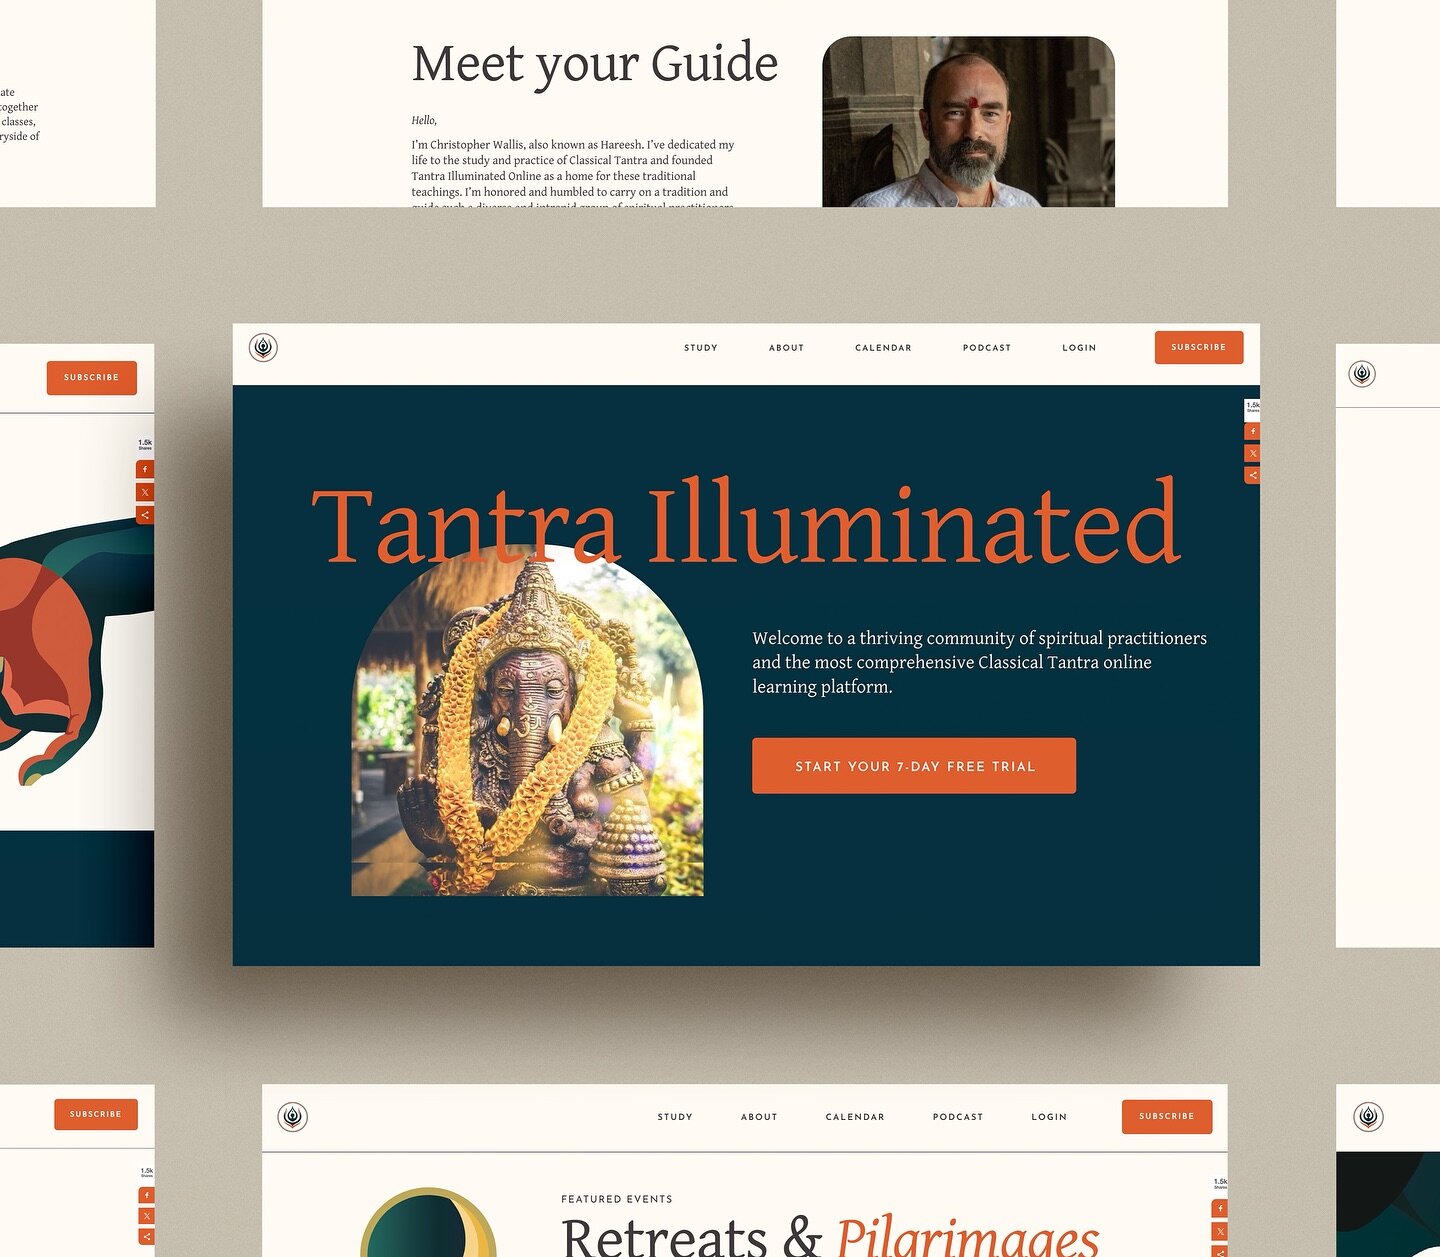 Branding/web/ illustration by Camatkara Creative
For Tantra Illuminated